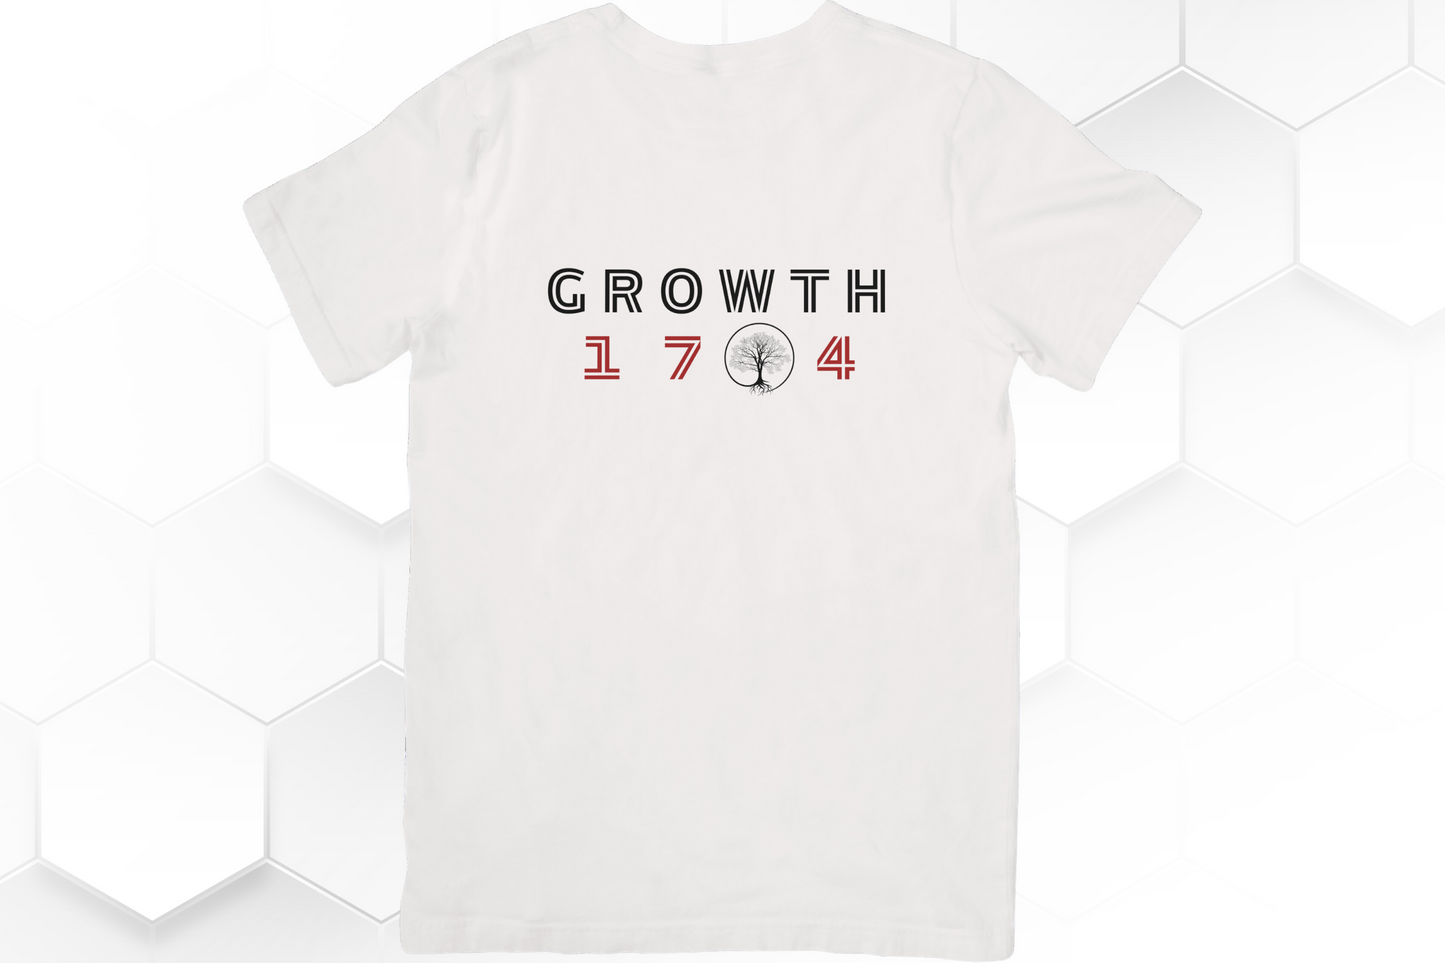 Growth 1704 Inline Tee